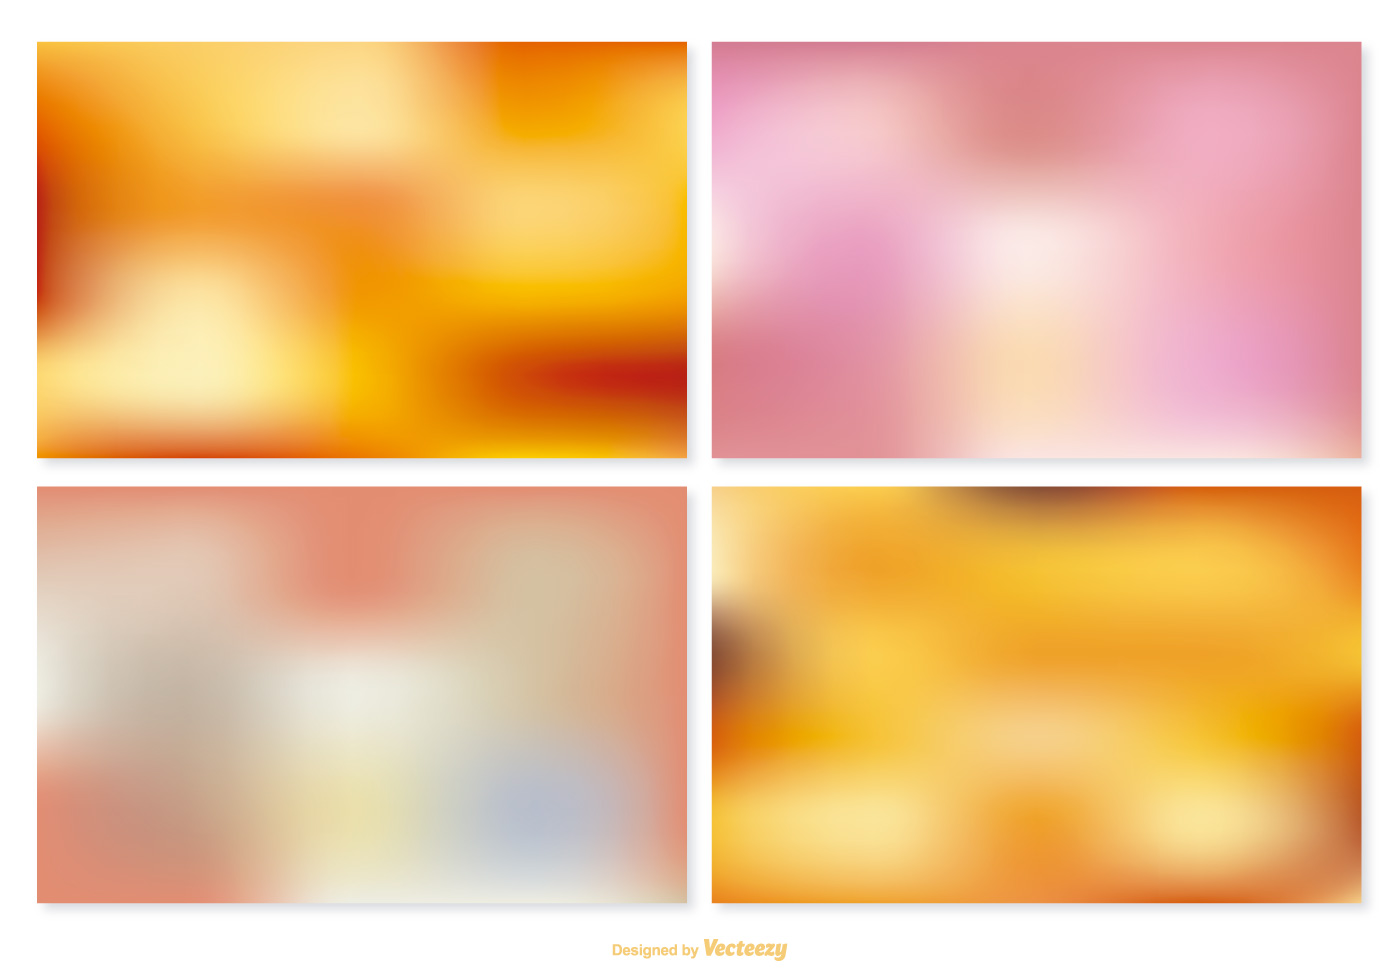 Blurred Vector Backgrounds 122132 - Download Free Vectors, Clipart